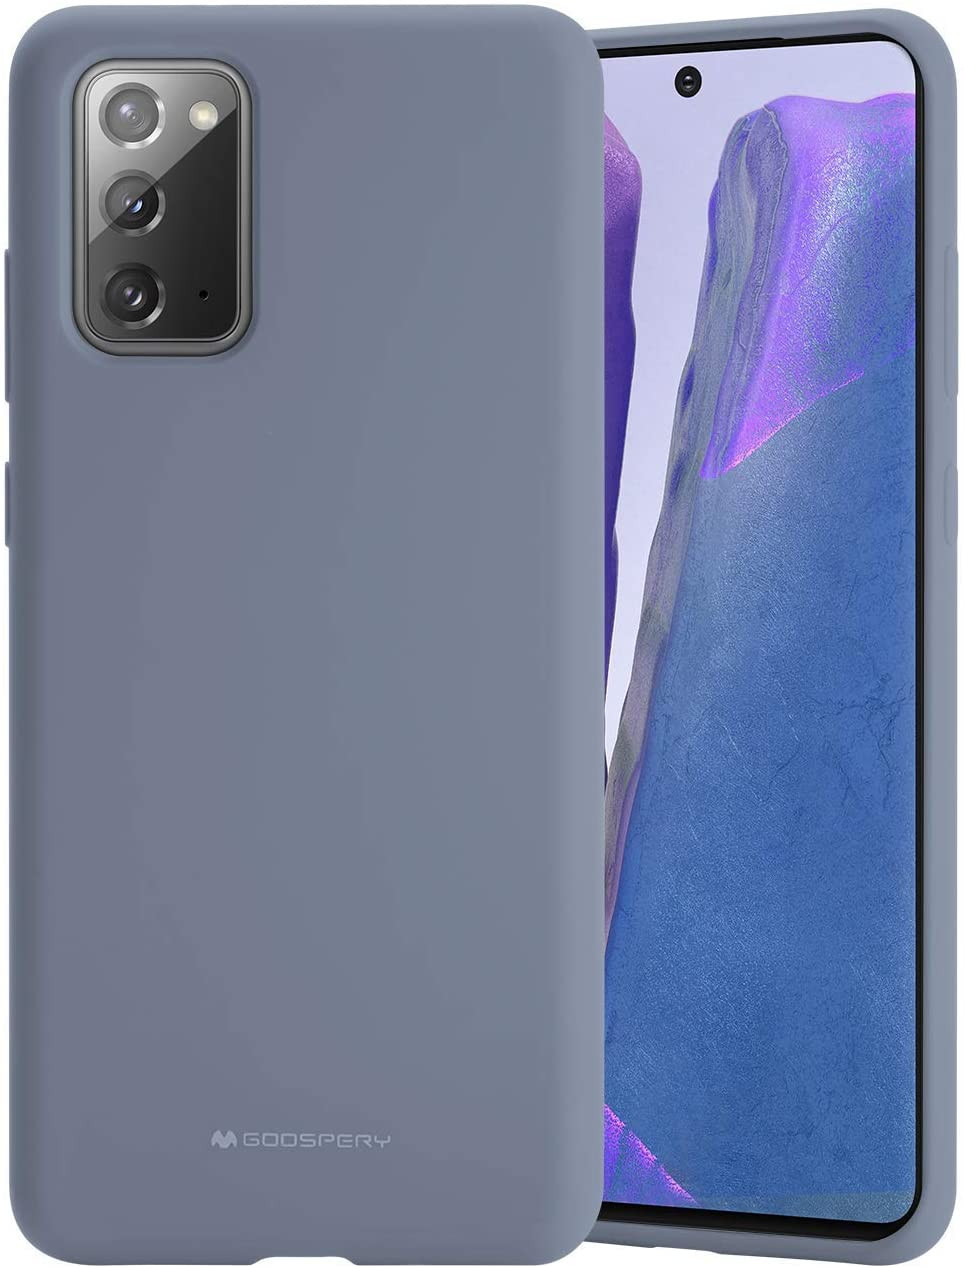 Husa protectie pentru Samsung Galaxy A52 ultra slim din silicon Gri,silk touch, interior din catifea